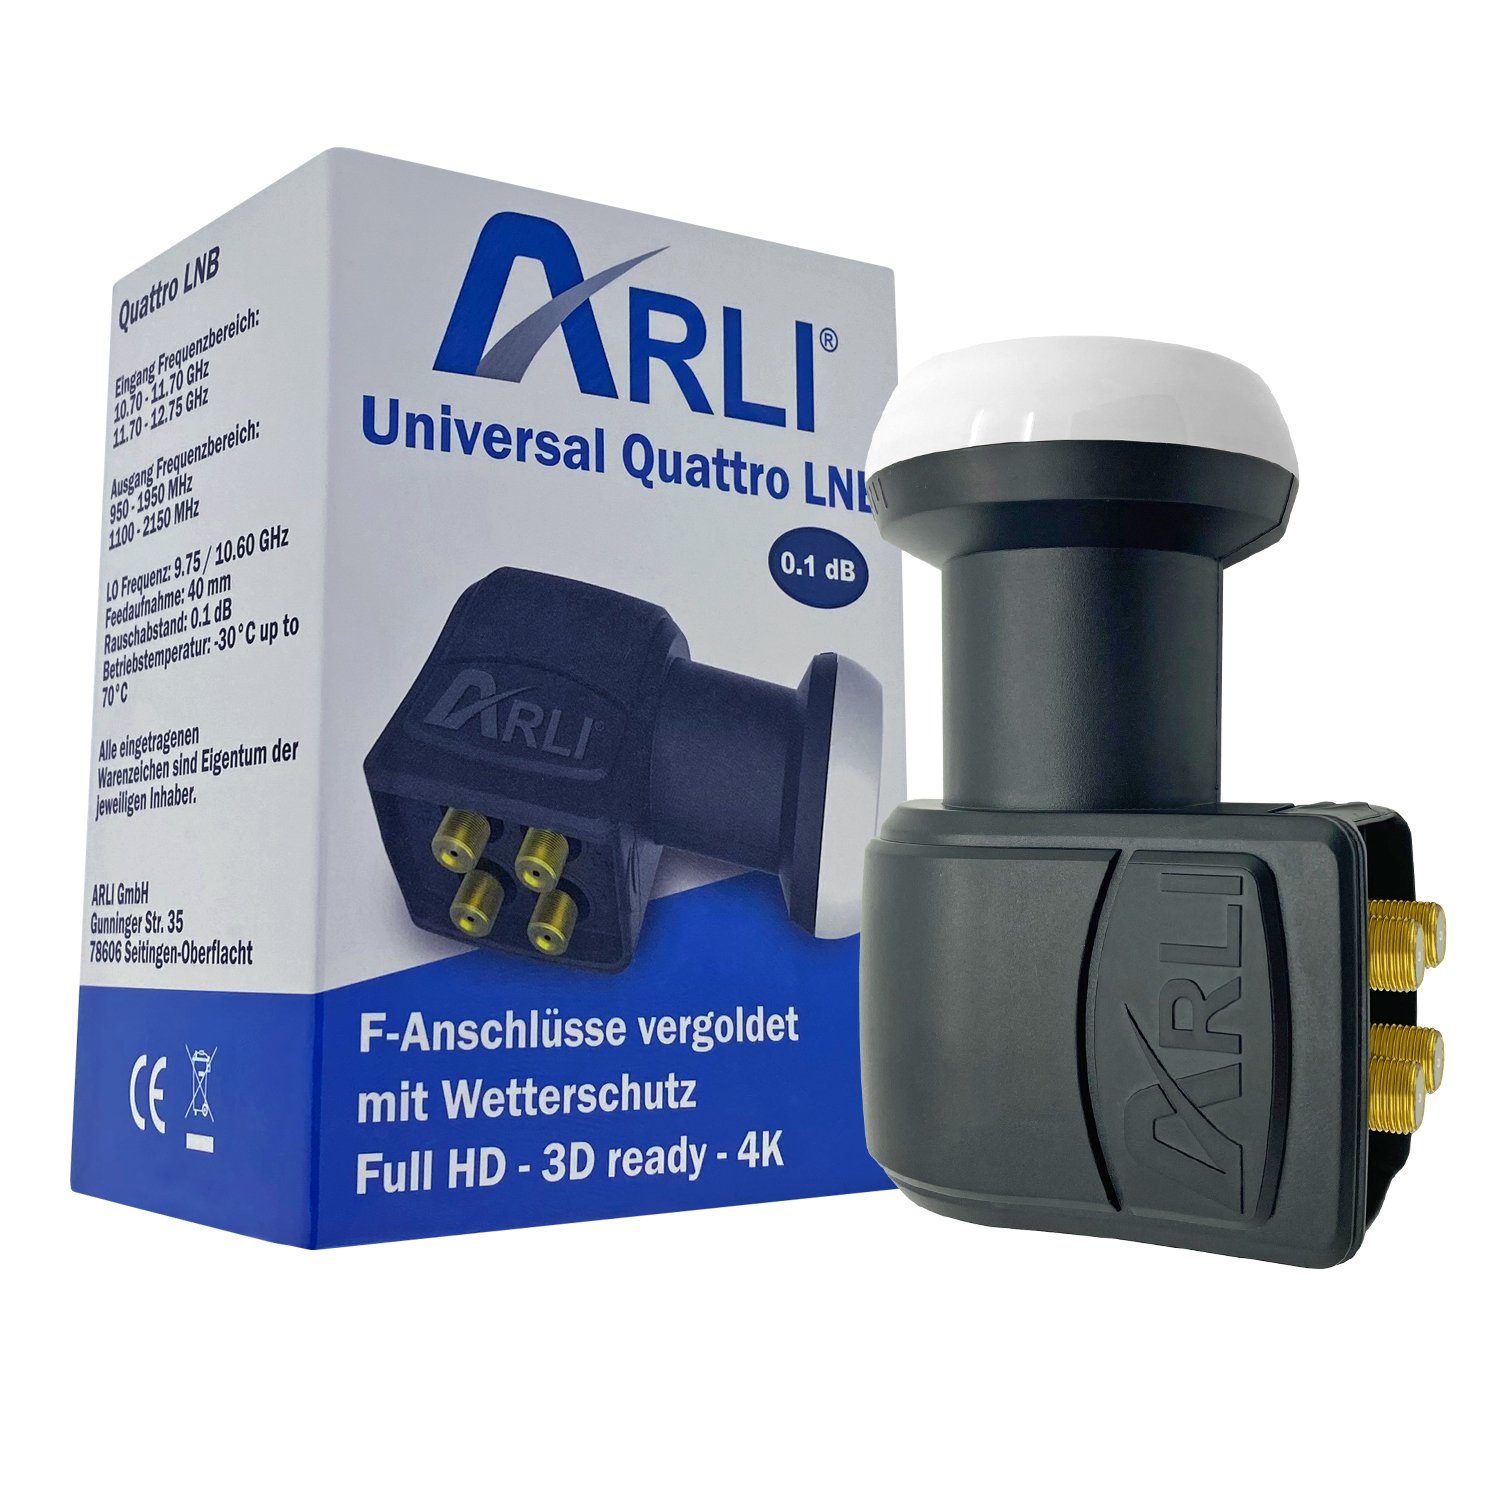 ARLI Universal Quattro LNB 0.1dB für Multischalter Universal-Quattro-LNB (für 4 Teilnehmer) Schwarz - 4 Stück